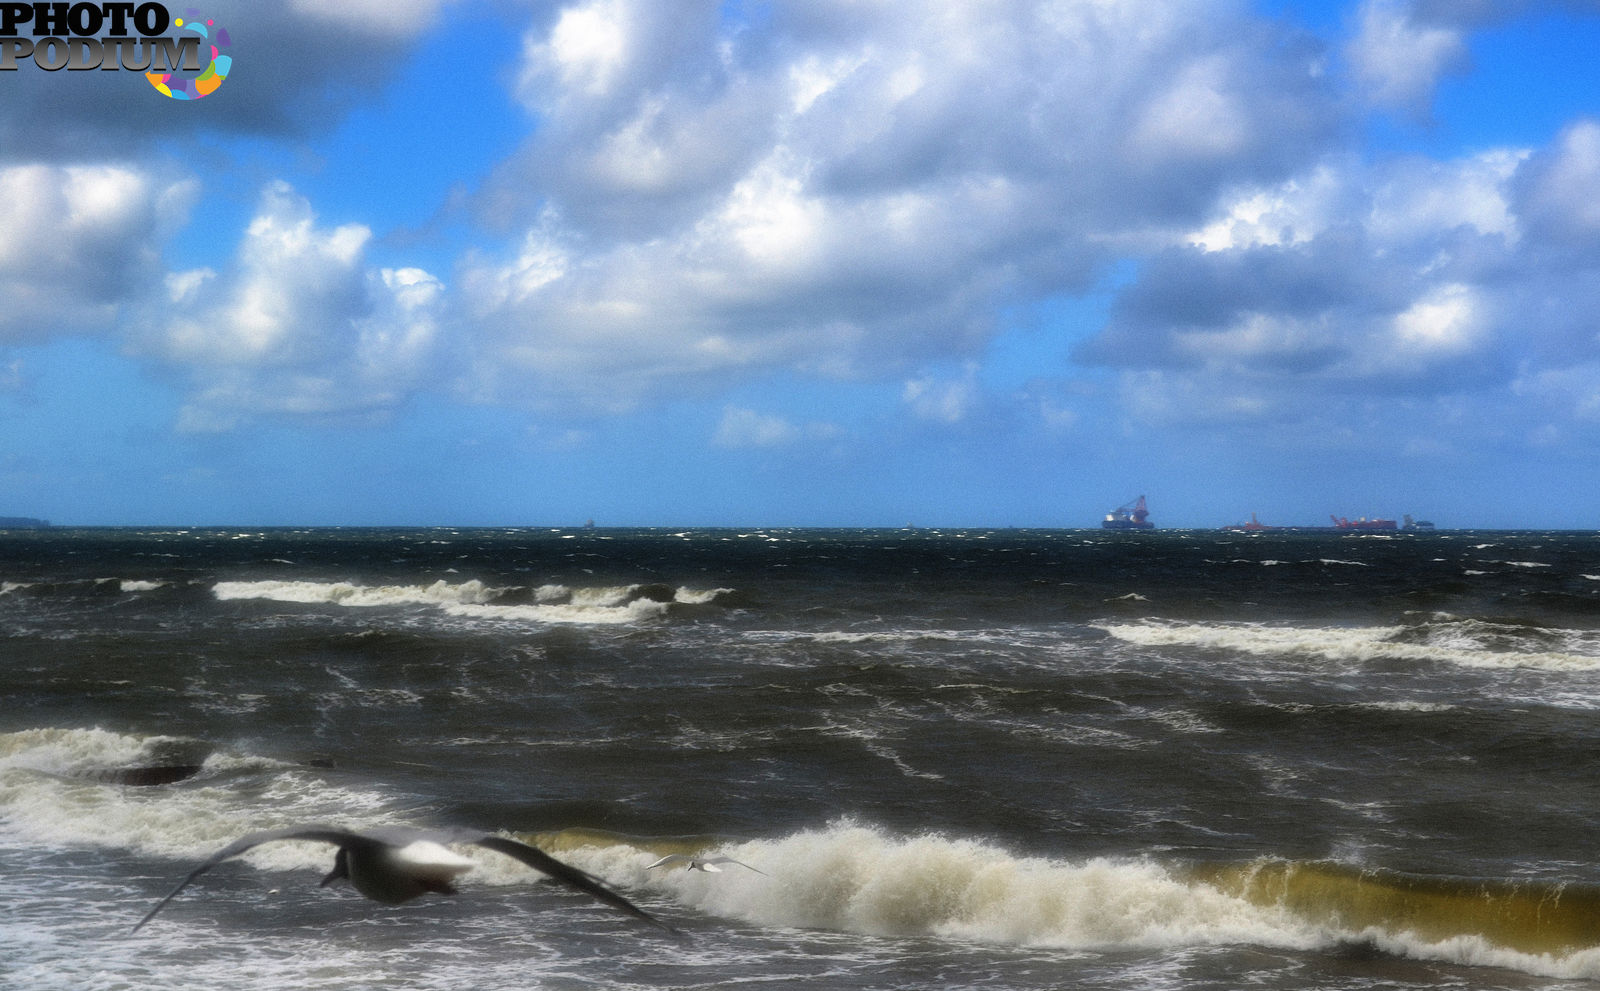 Температура воды в балтийском море зеленоградск. Балтийское море Зеленоградск. Балтийское море грозовое. Любуйся Балтийским морем Зеленоградск. Цвет моря в Зеленоградске.